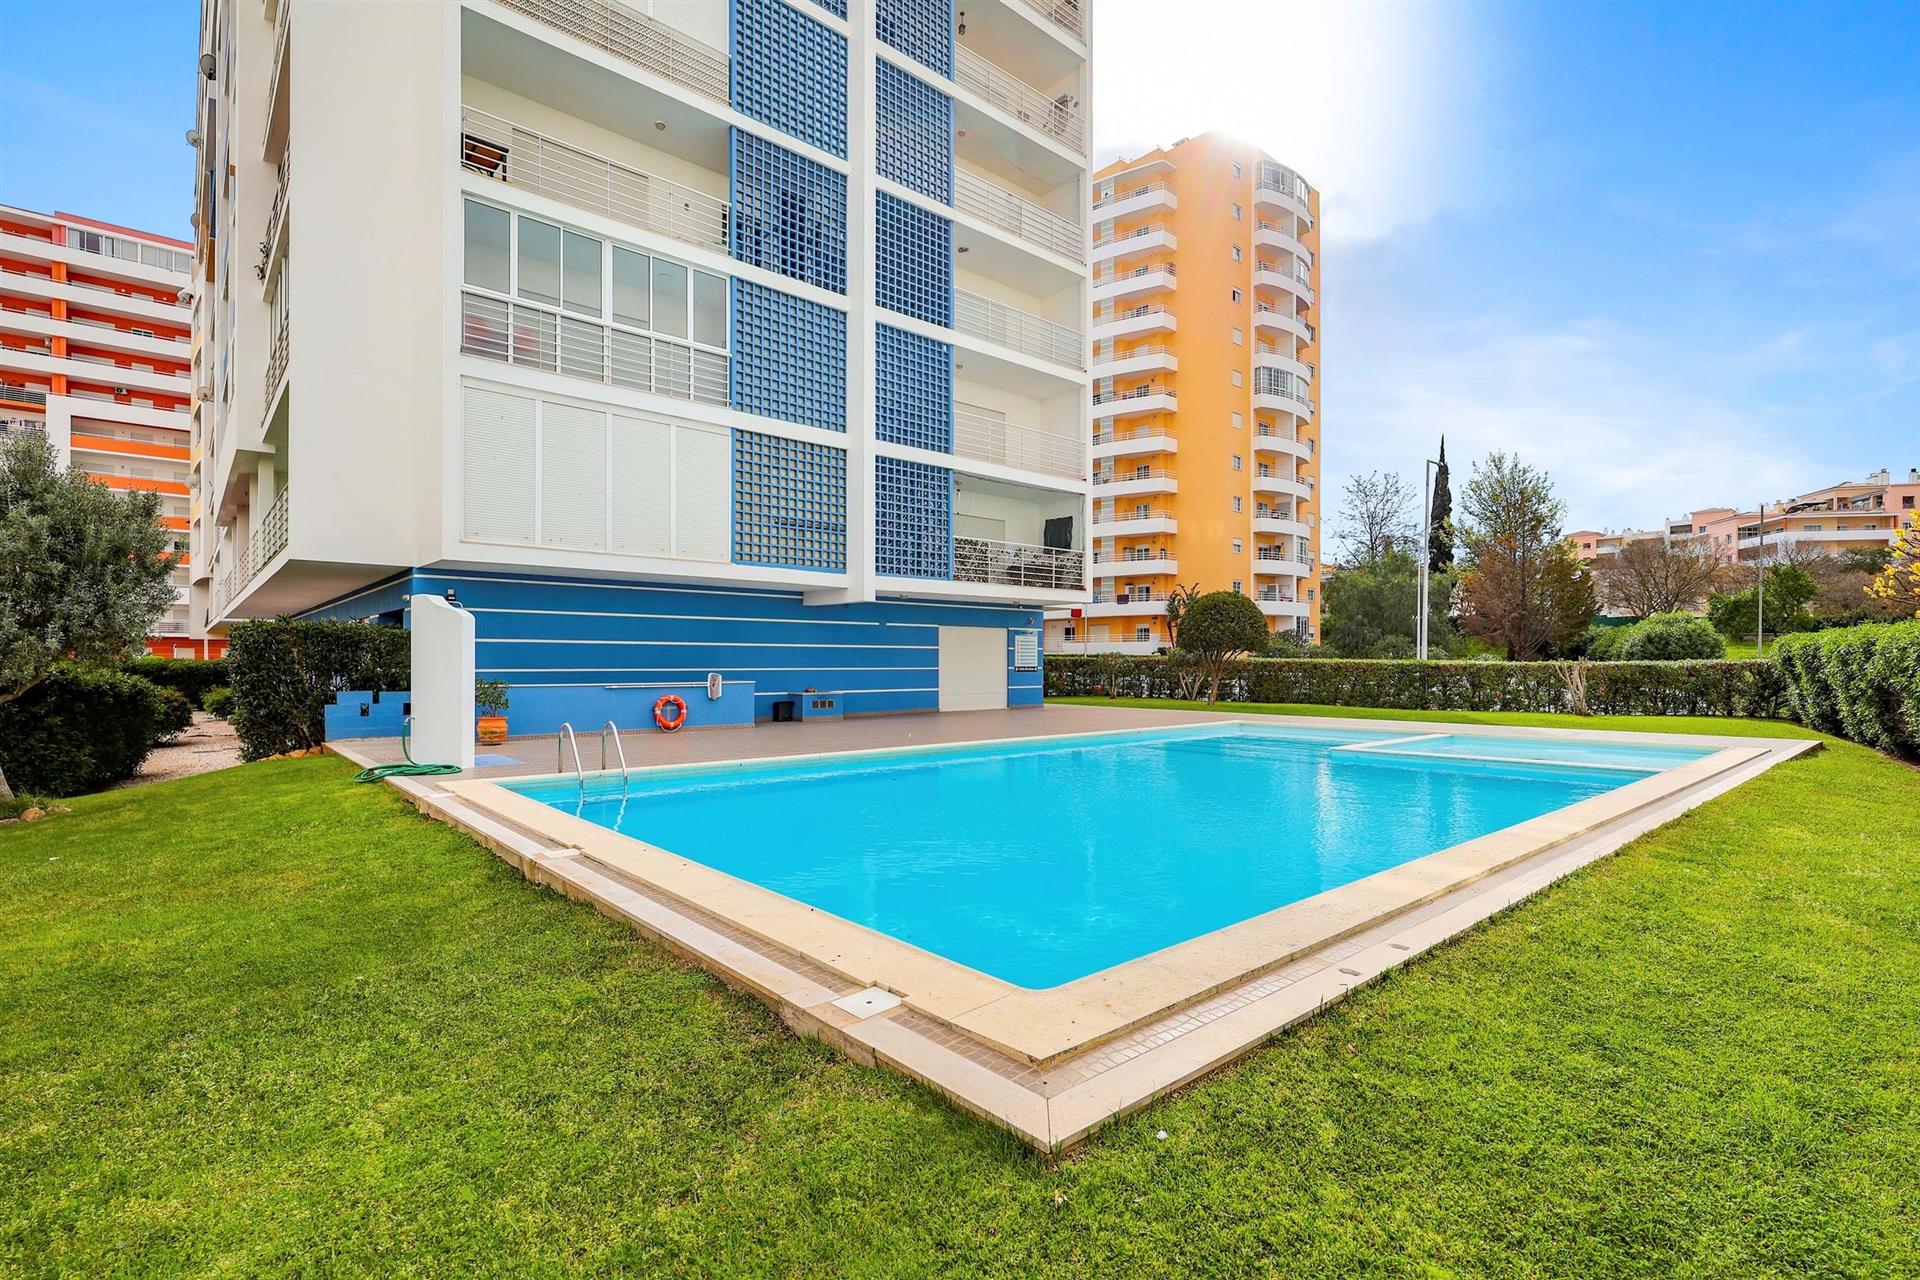 Apartamento de 1 dormitorio con piscina en venta en Alto do Quintão en Portimão